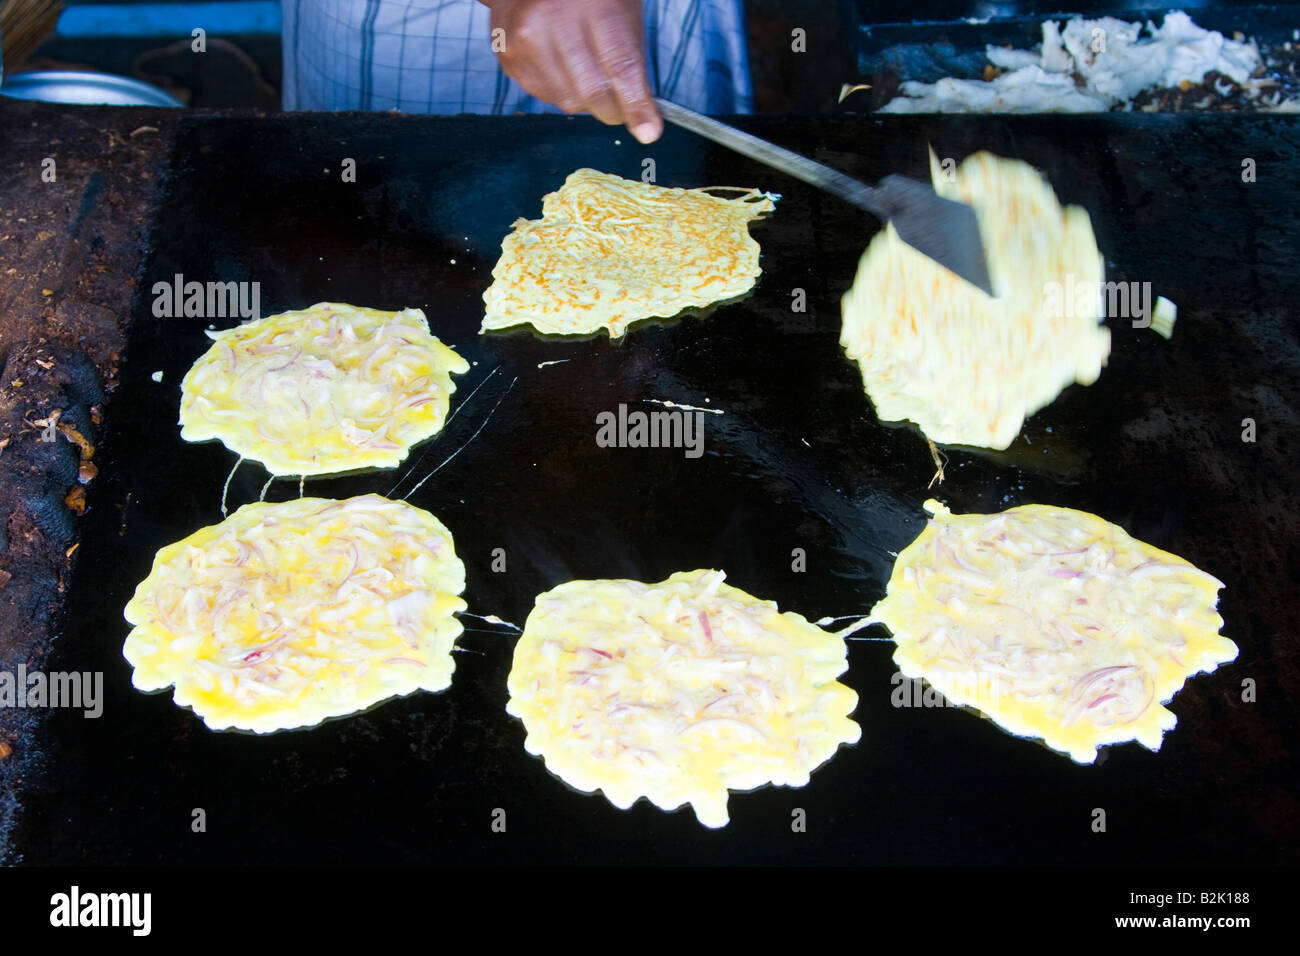 Street Vendor Frying Omlettes in Darasuram South India Stock Photo